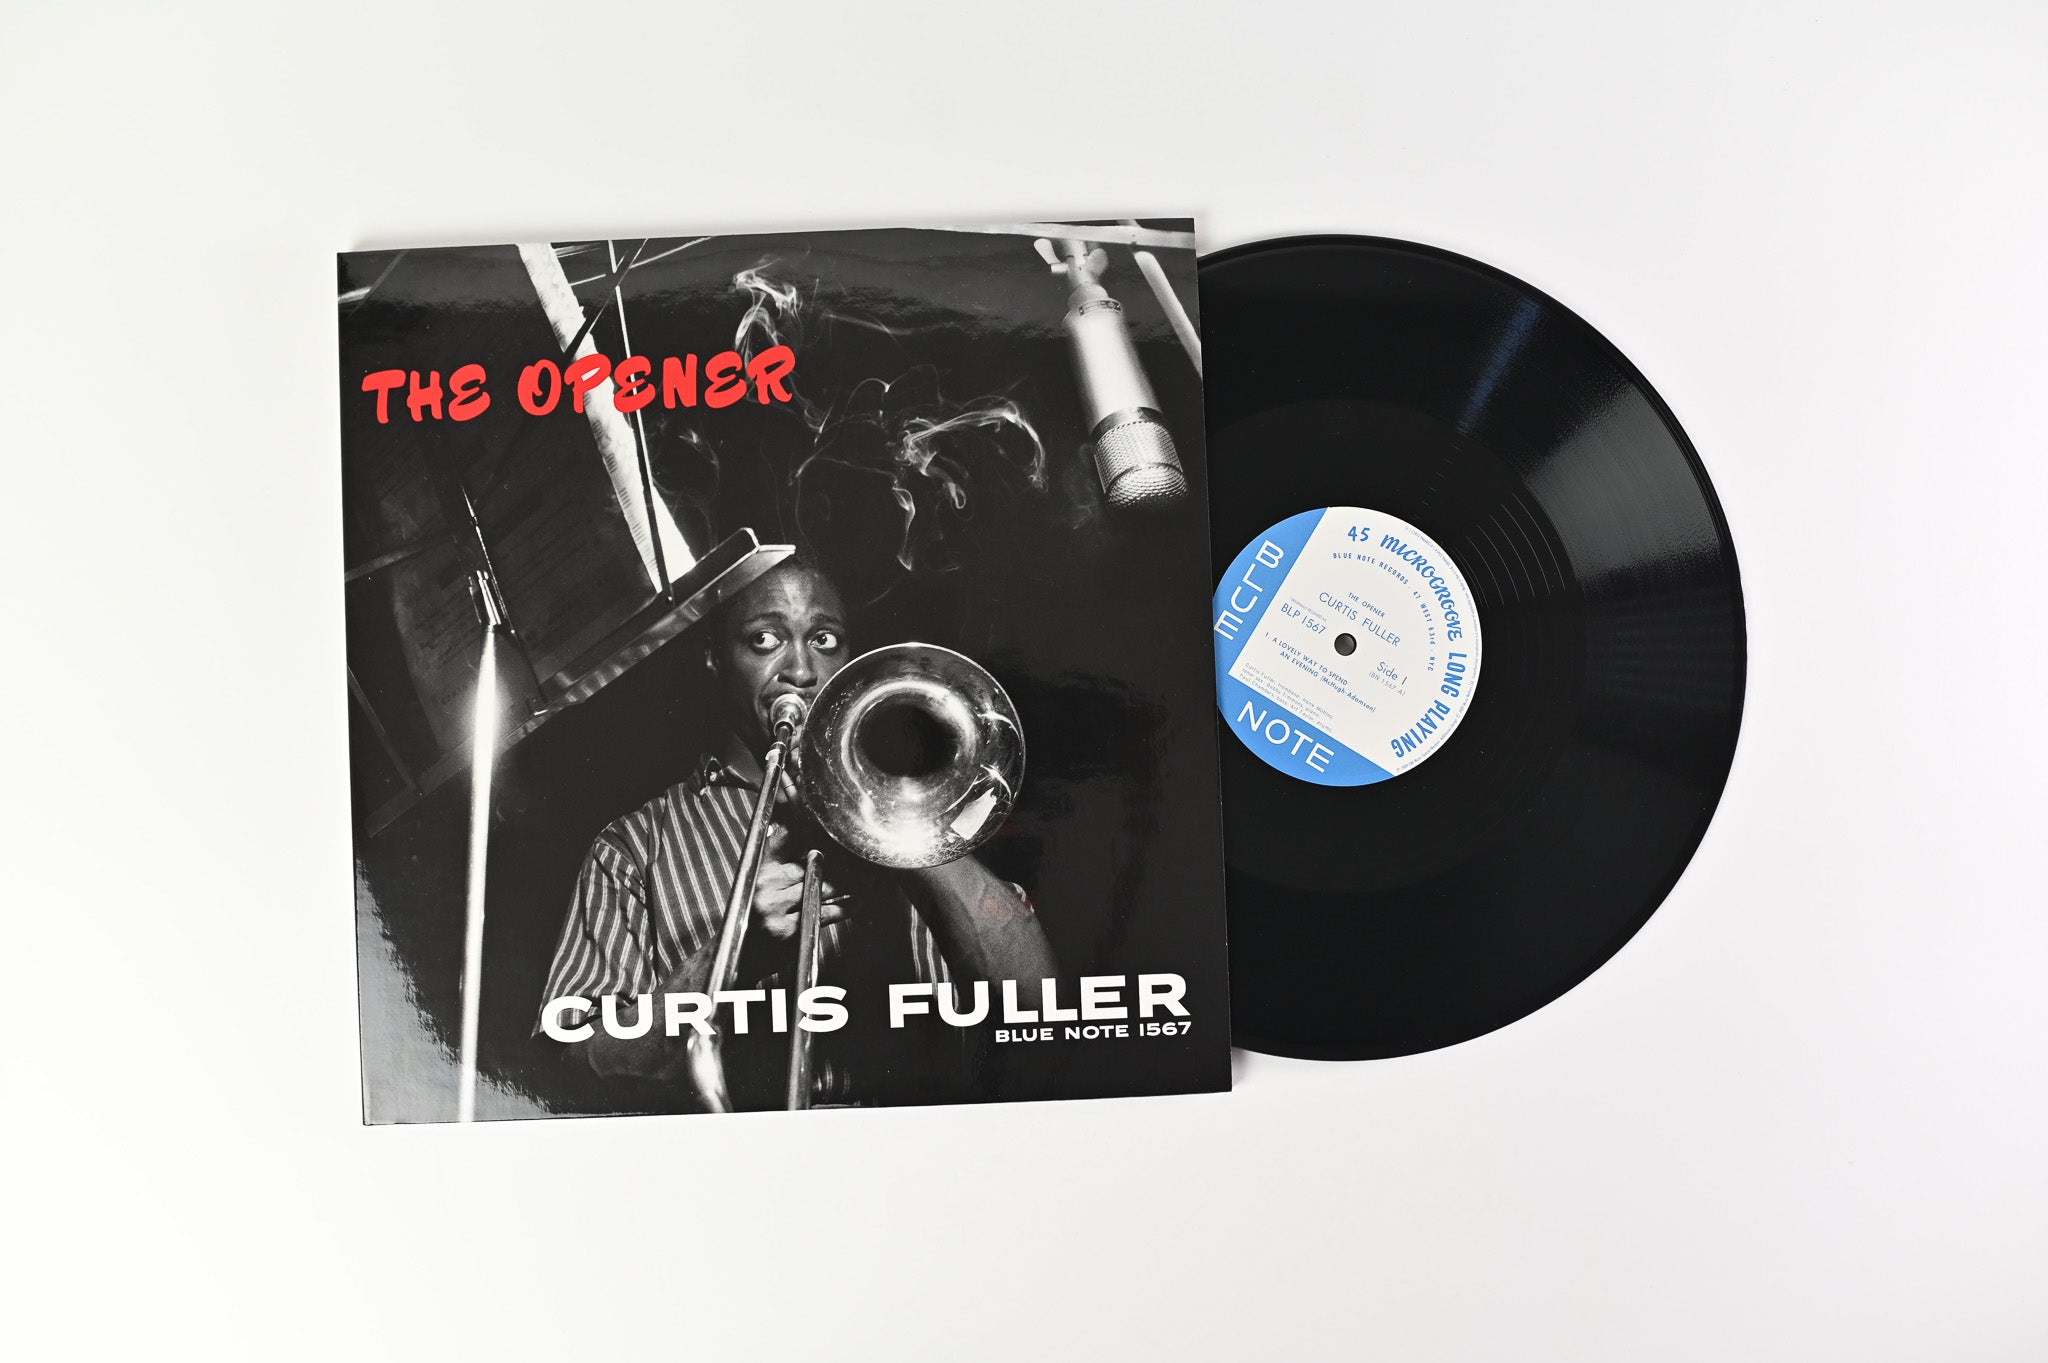 Curtis Fuller - The Opener on Blue Note Music Matters Ltd Reissue 45 RPM